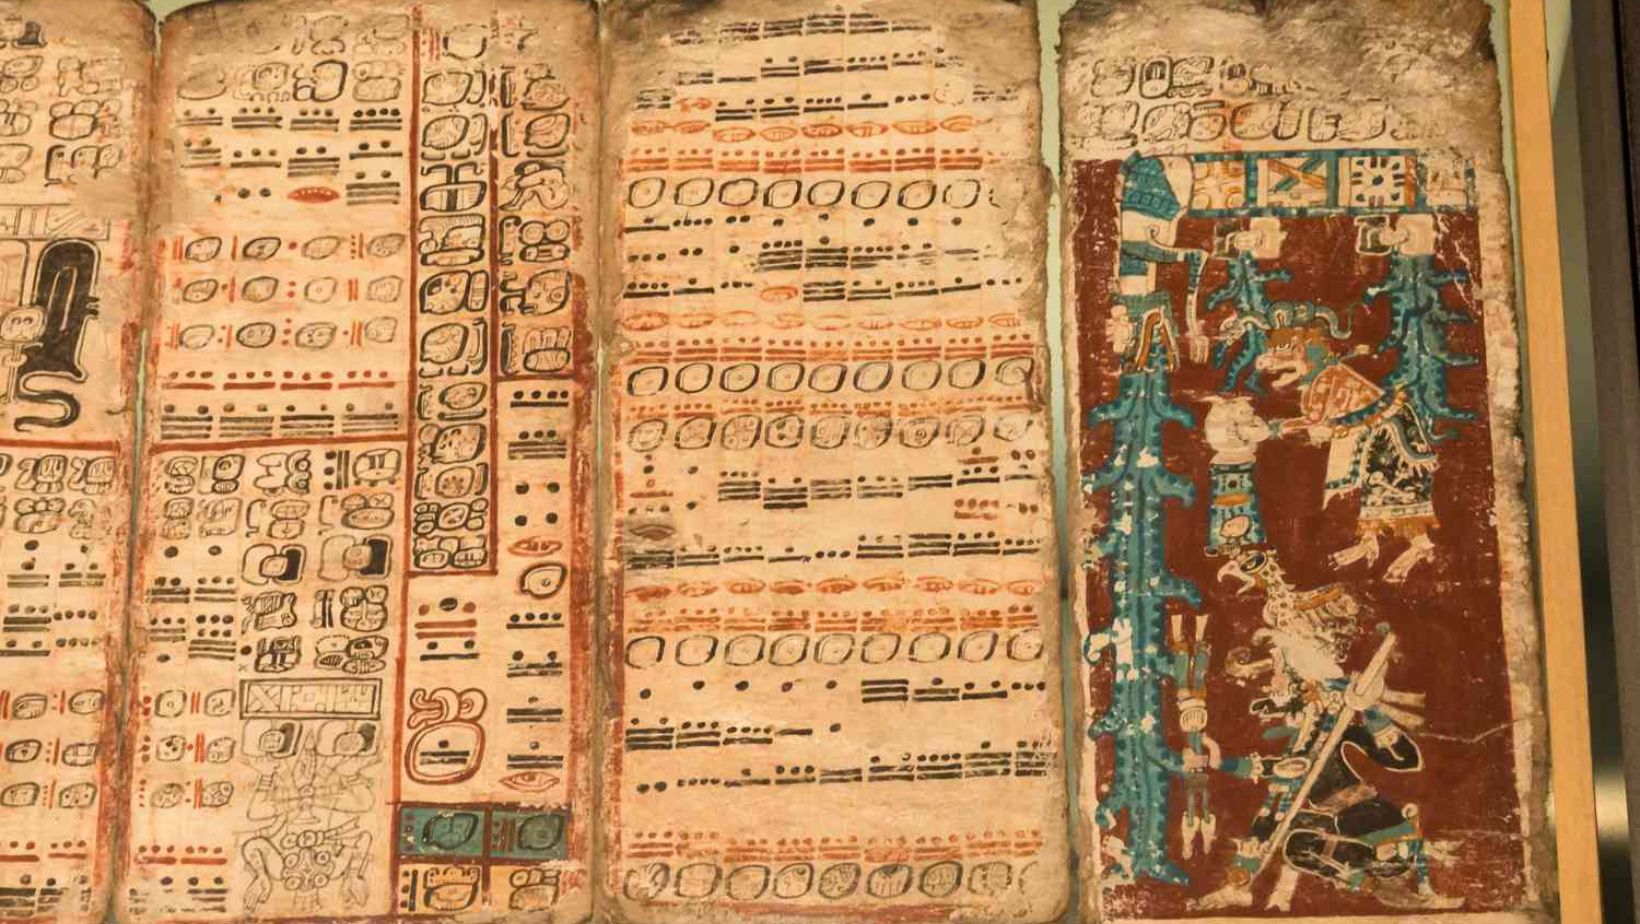 Hieroglyphs and Royal Art, Maya Rulers Attracting Subjects Over Generations